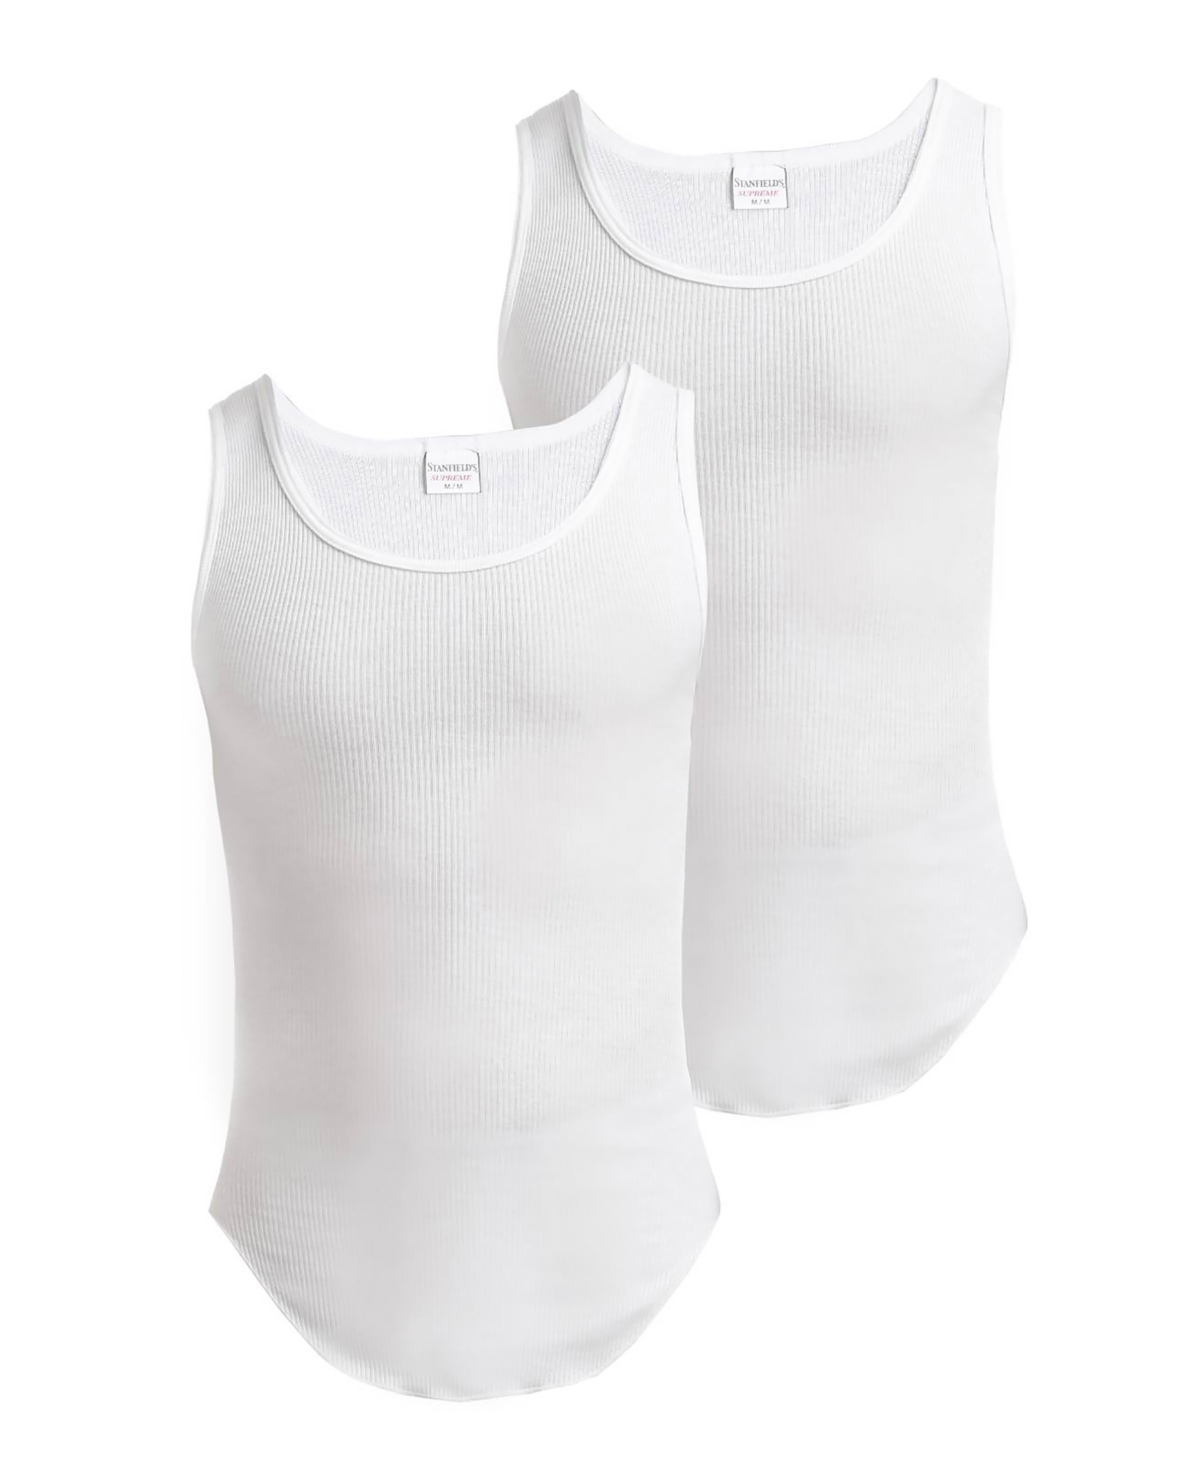 Men's Supreme Cotton Blend Tank Undershirts, Pack of 2 - White